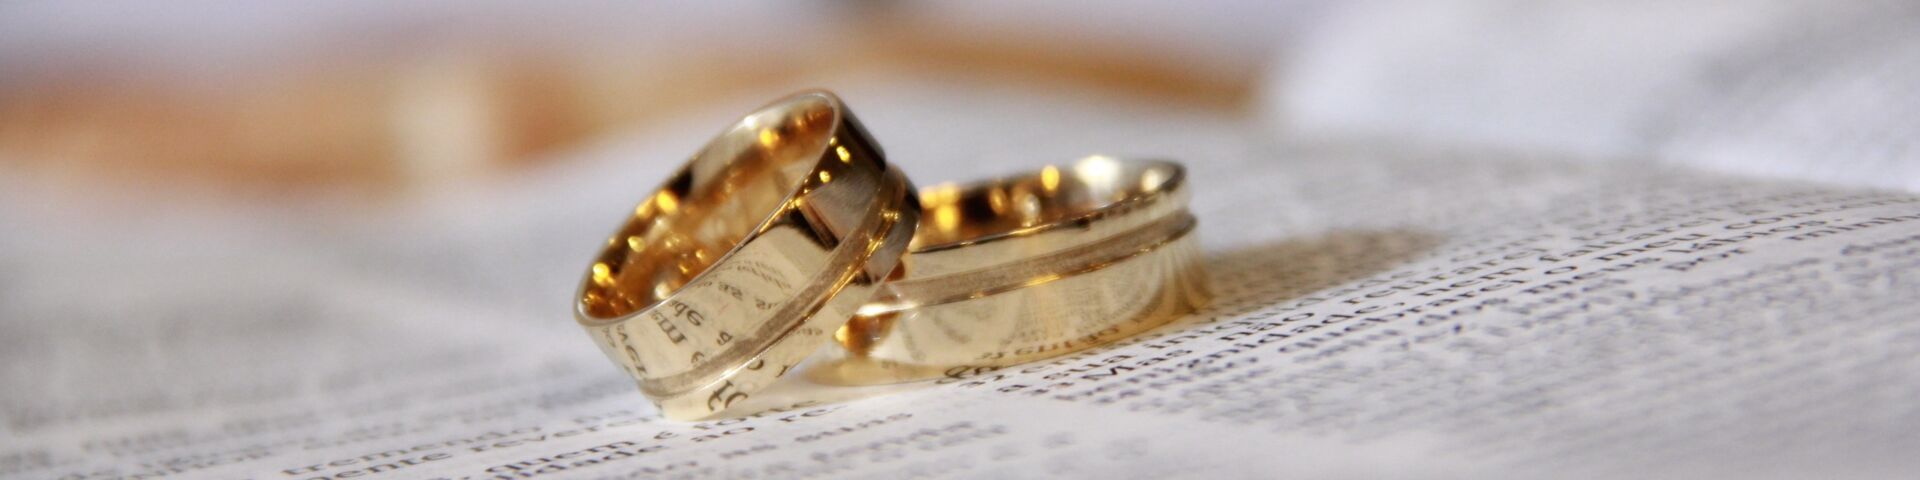 hand-ring-metal-yellow-marriage-bible-1218735-pxhere.com.jpg